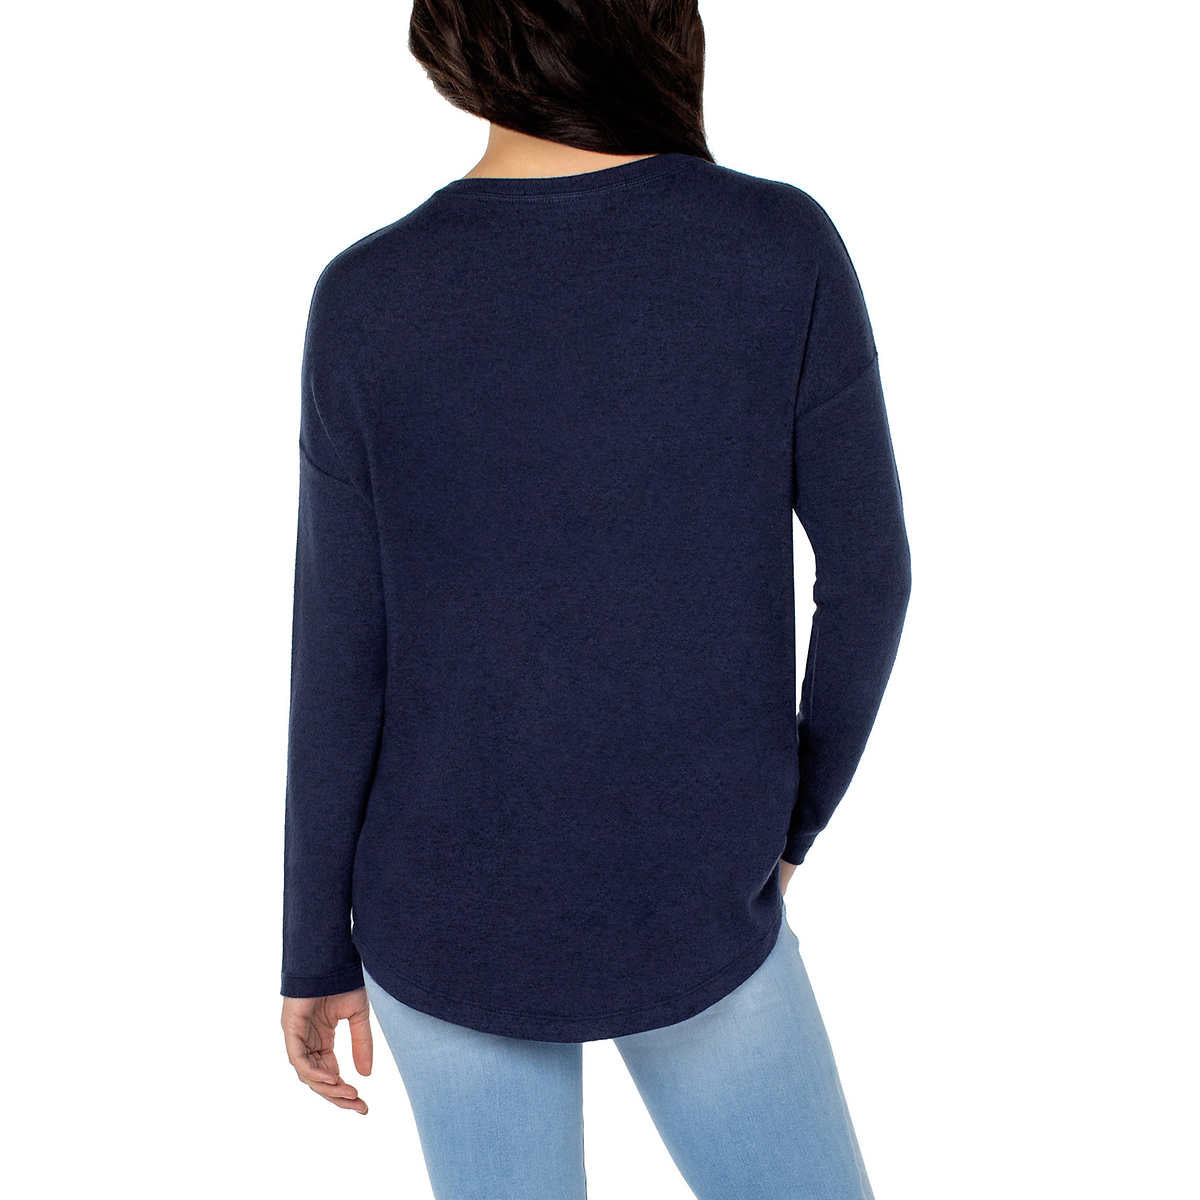 Well Worn Women's Ultra Soft V-neck Lightweight Knit Sweater Relaxed Fit Top